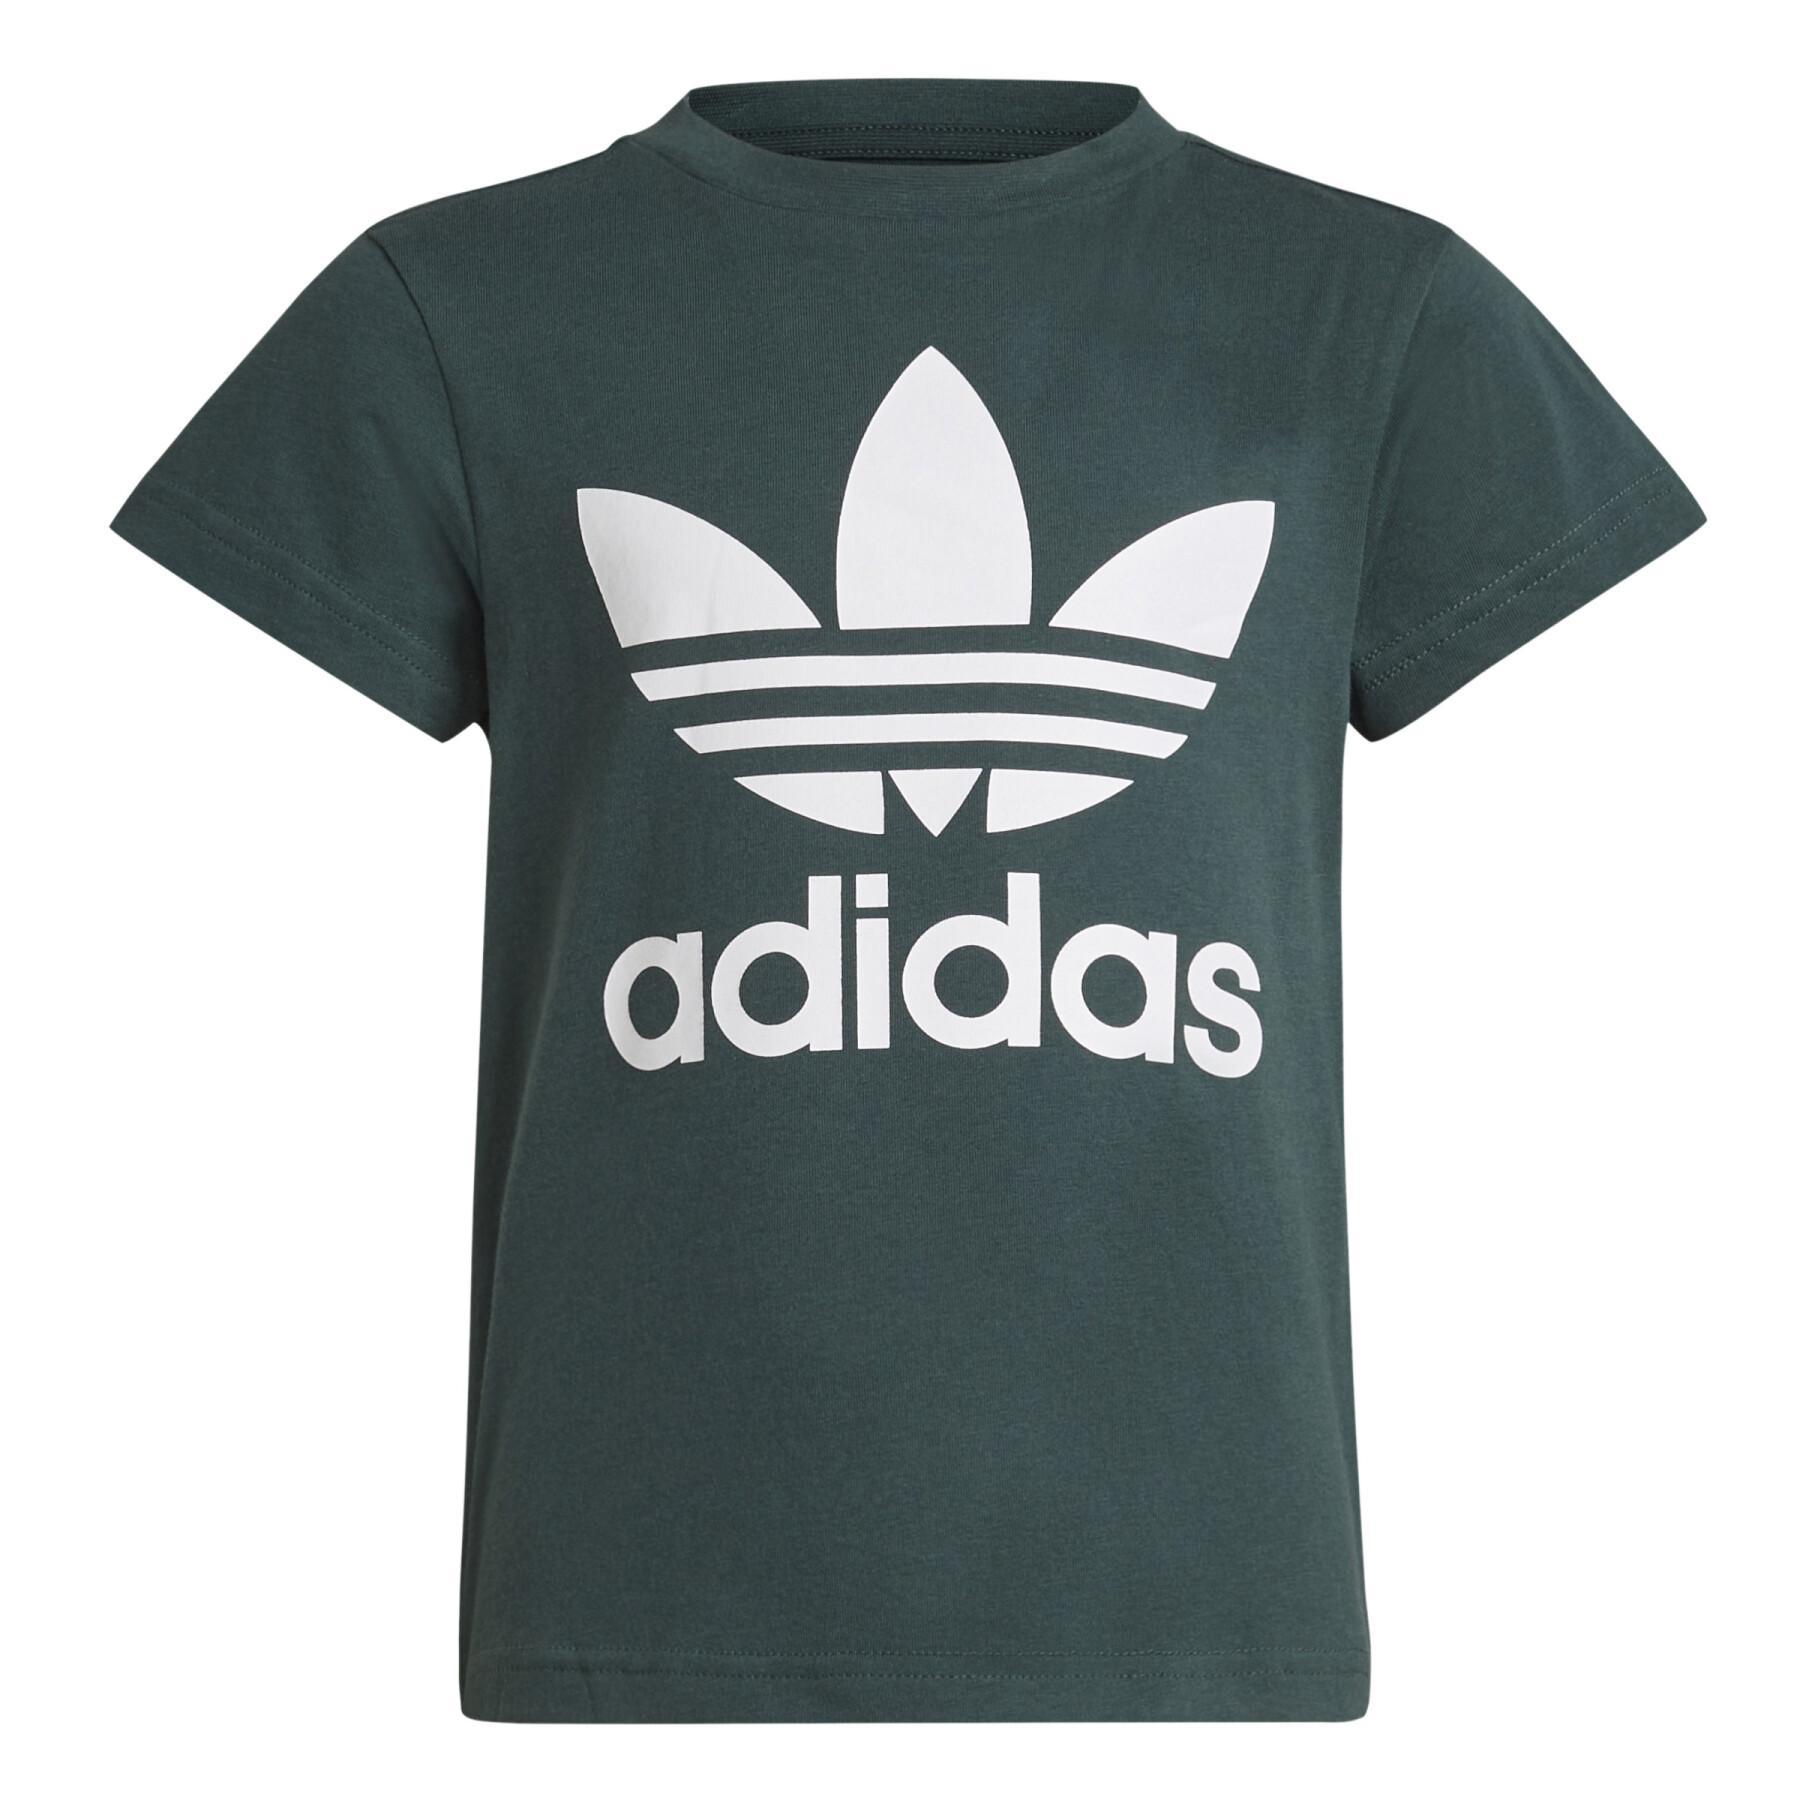 Kinder T-Shirt adidas Originals Trefoil Adicolor